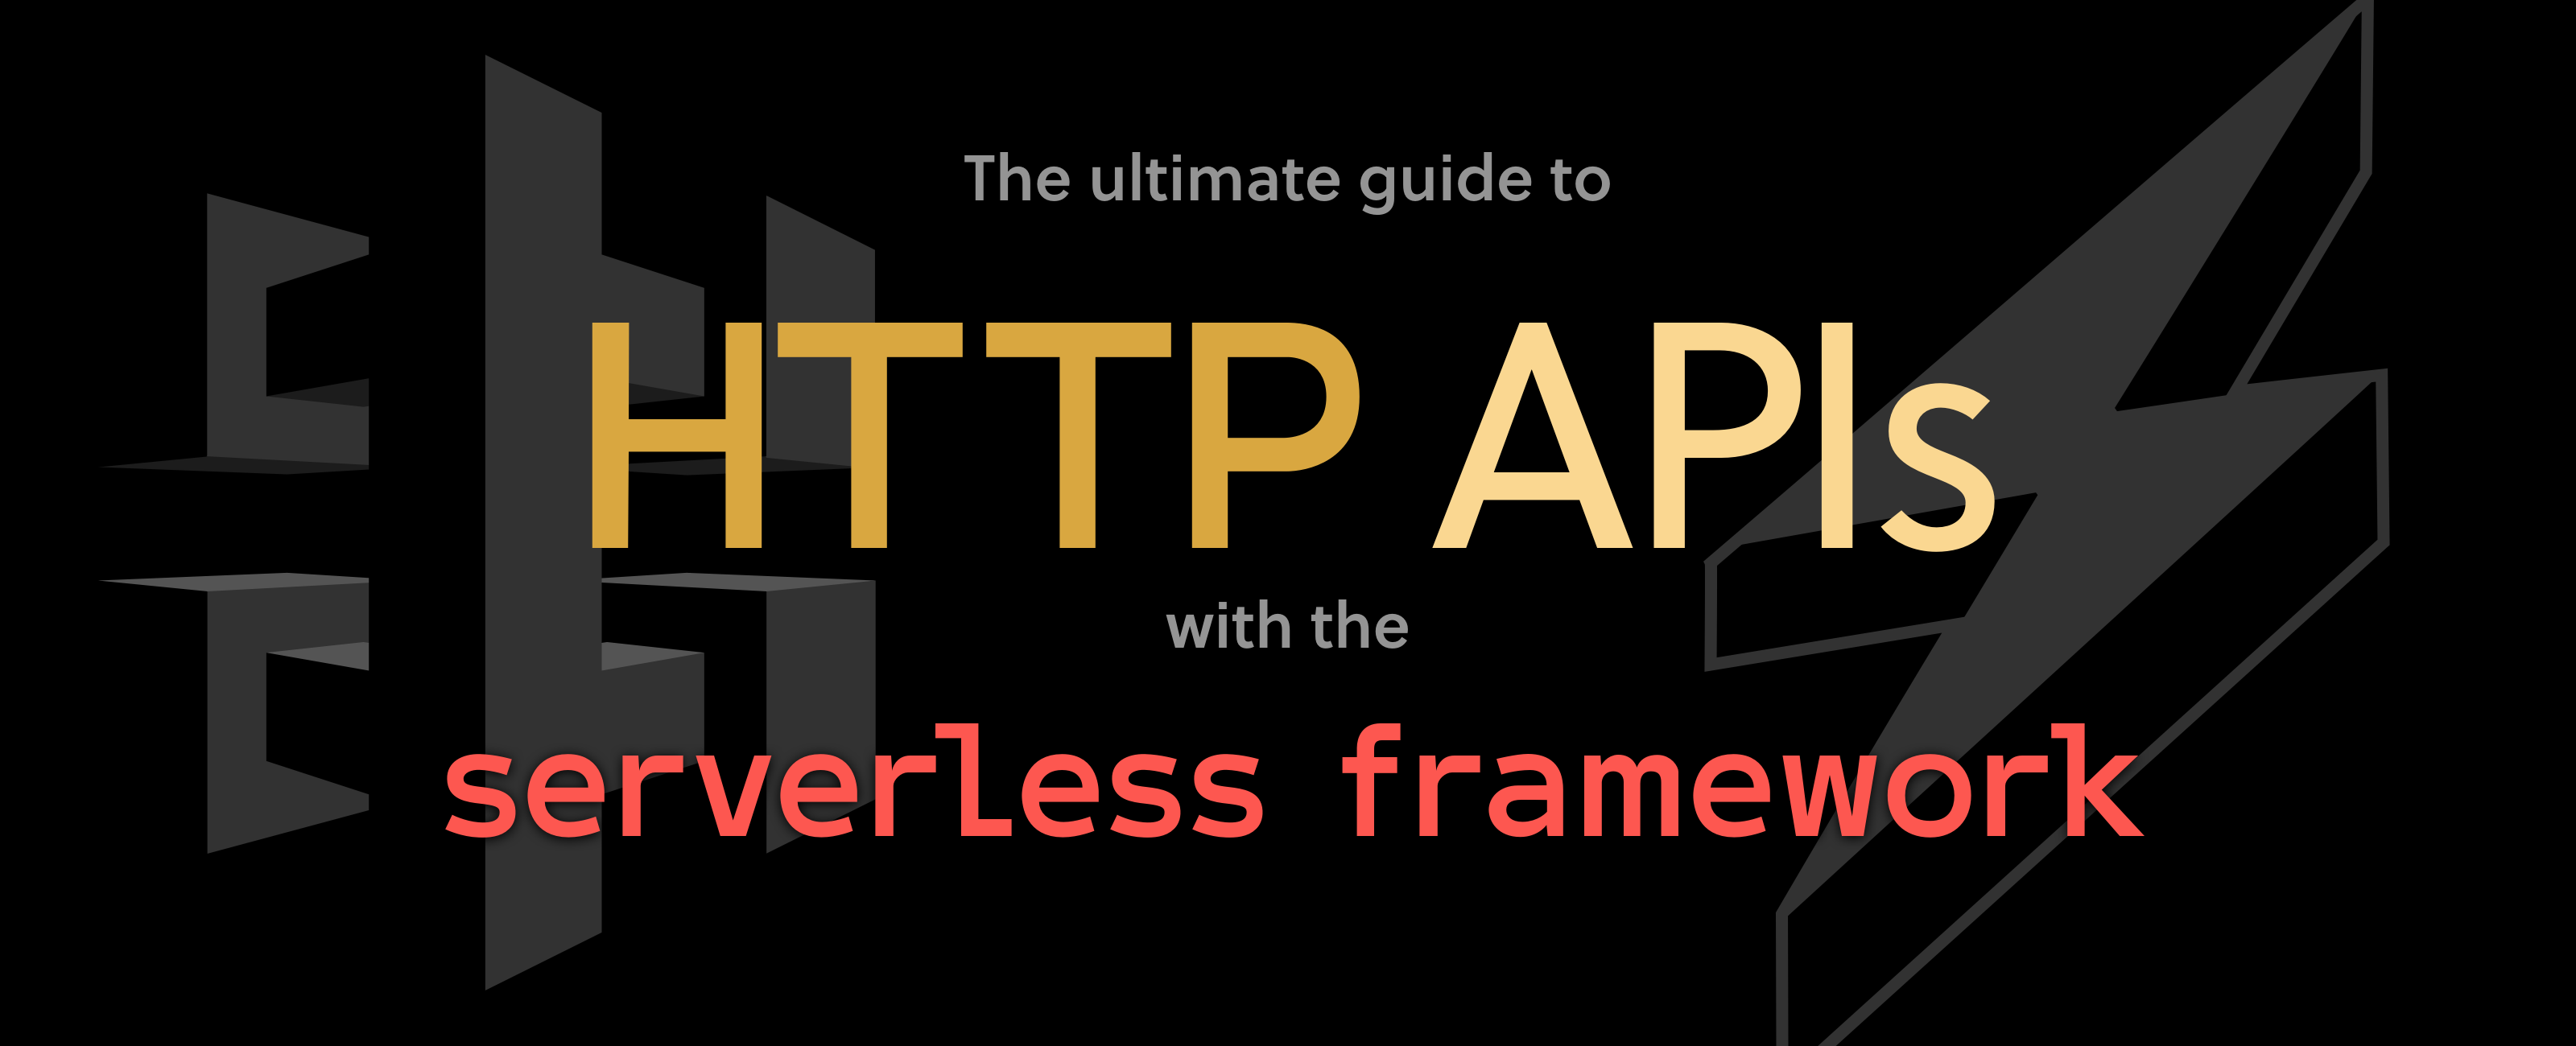 New Serverless Guide to AWS HTTP APIS